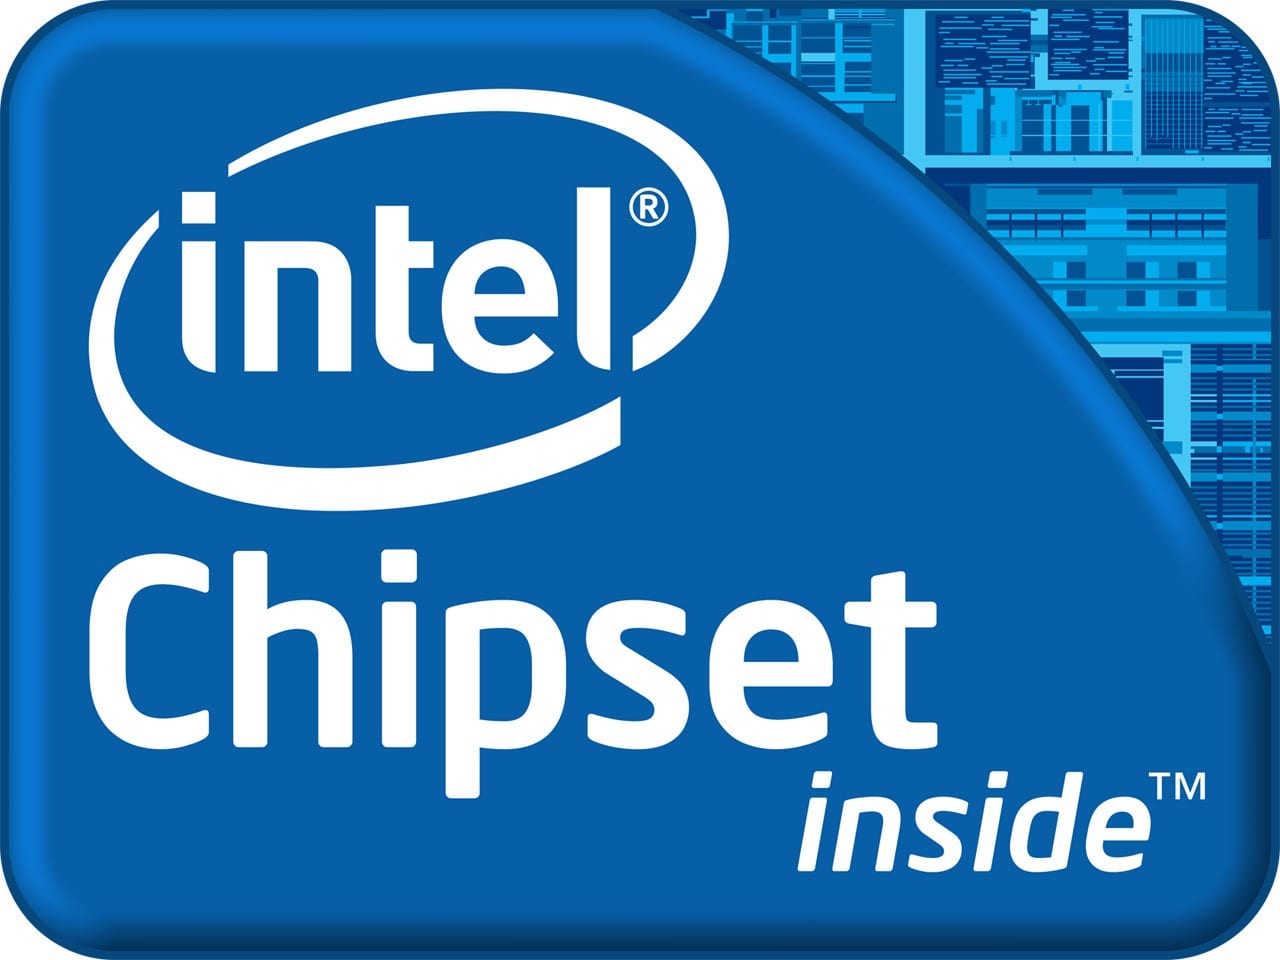 Intel sde. Интел. Логотип Intel. Чипсеты Интел. Значок Интел инсайд.